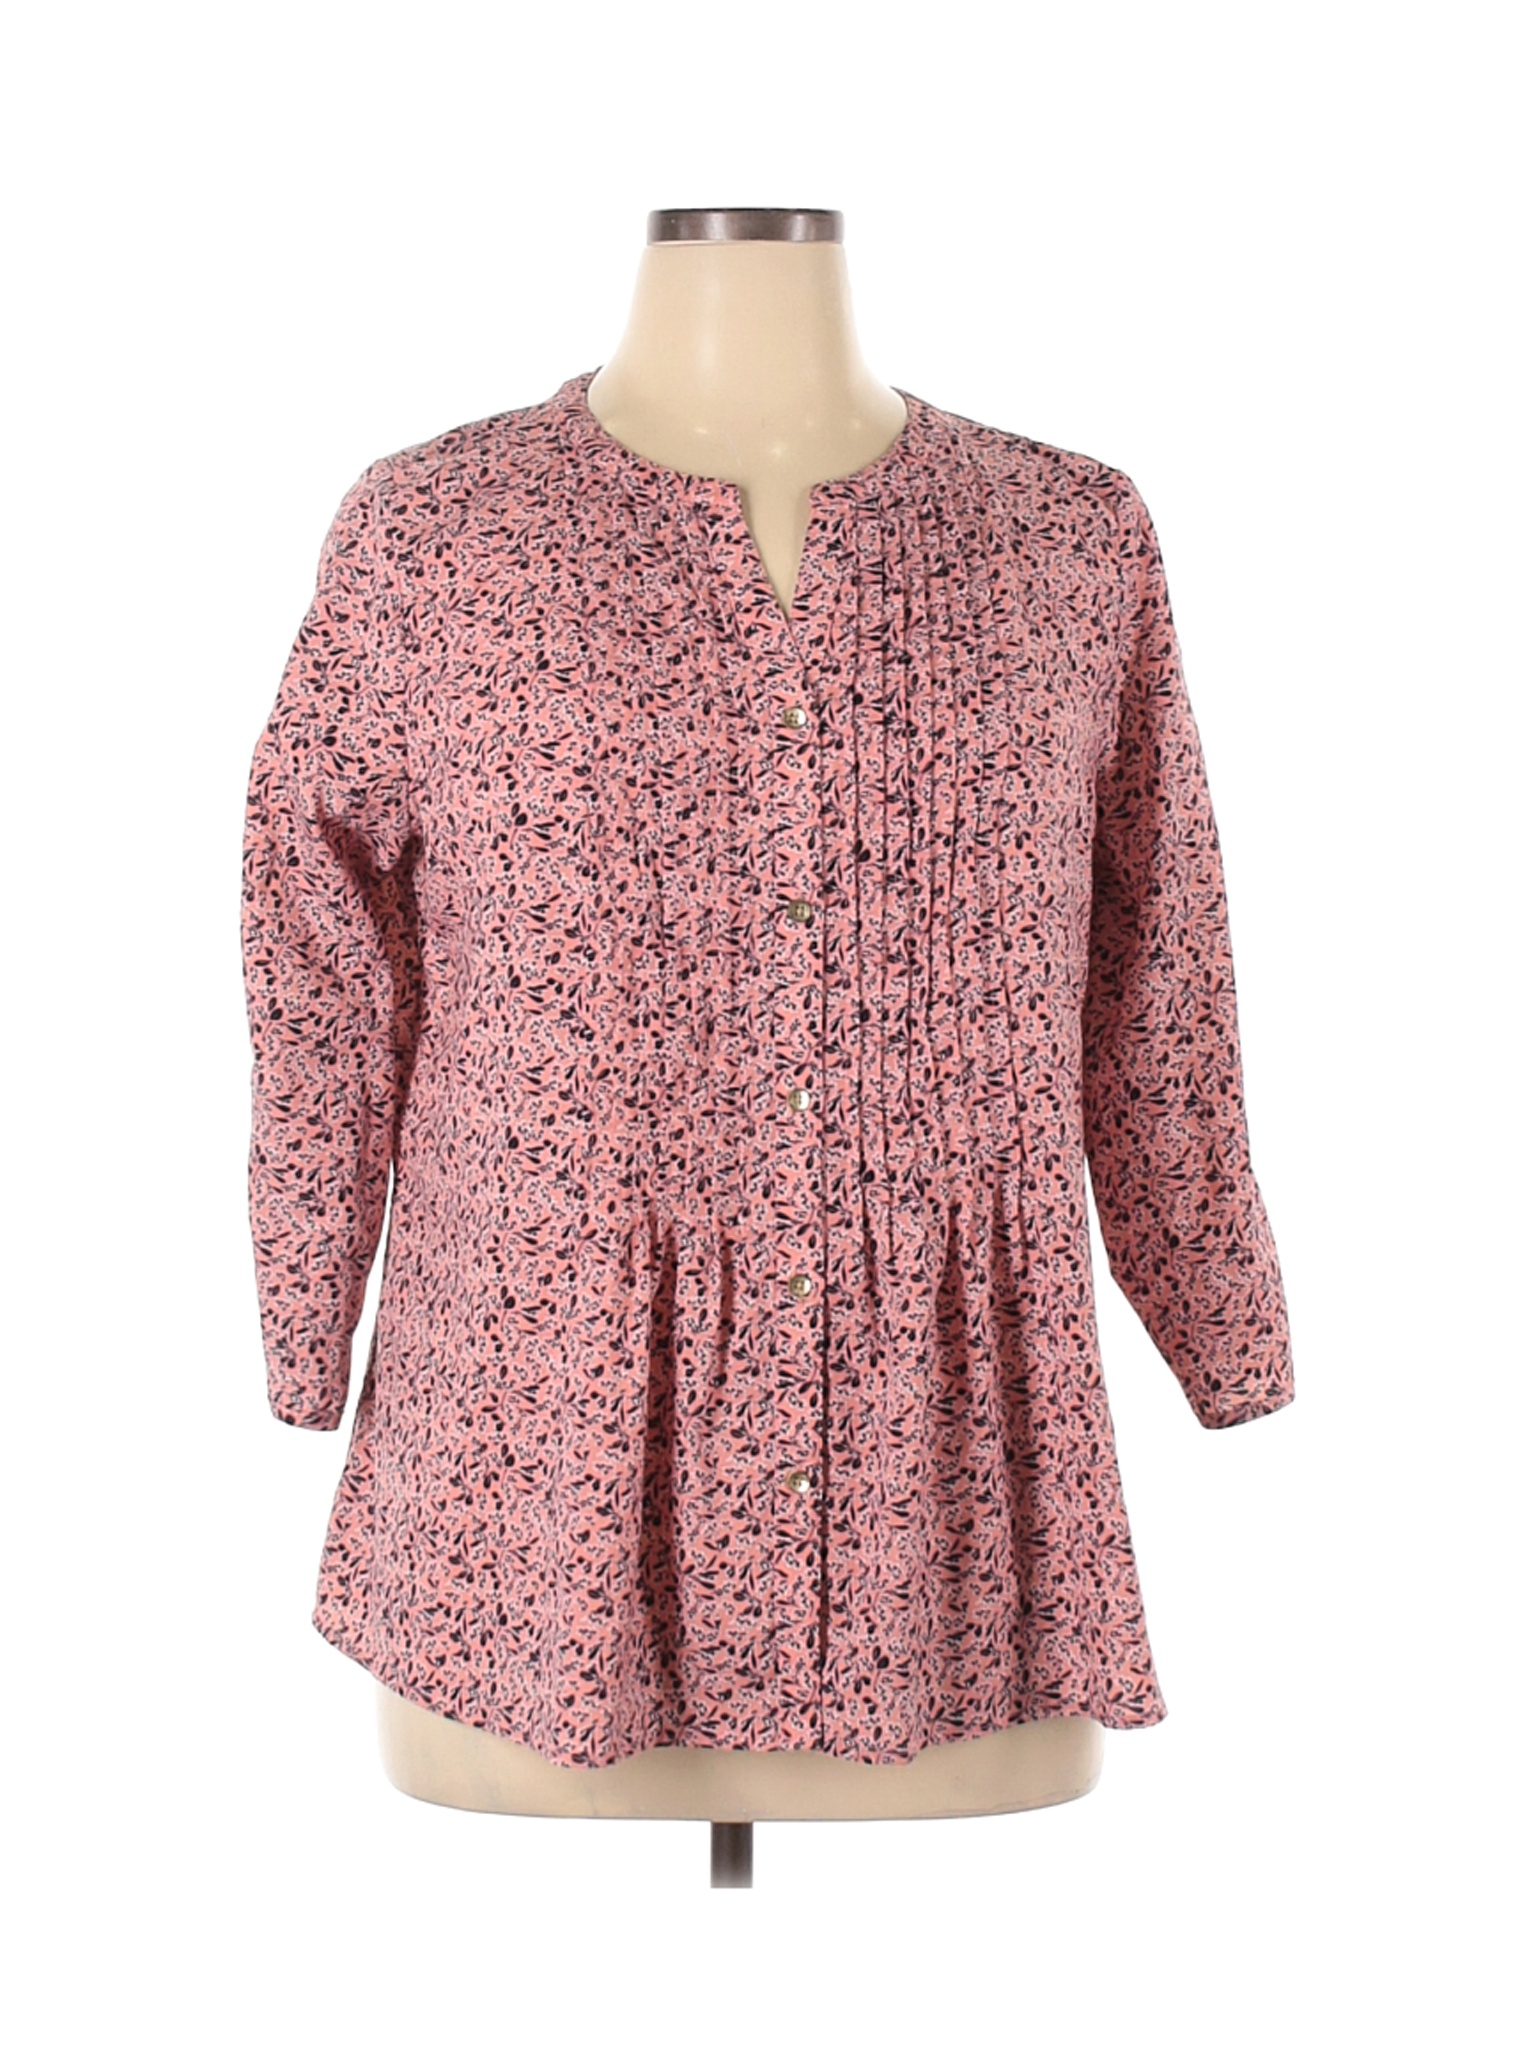 Croft & Barrow Women Pink Long Sleeve Blouse XL | eBay